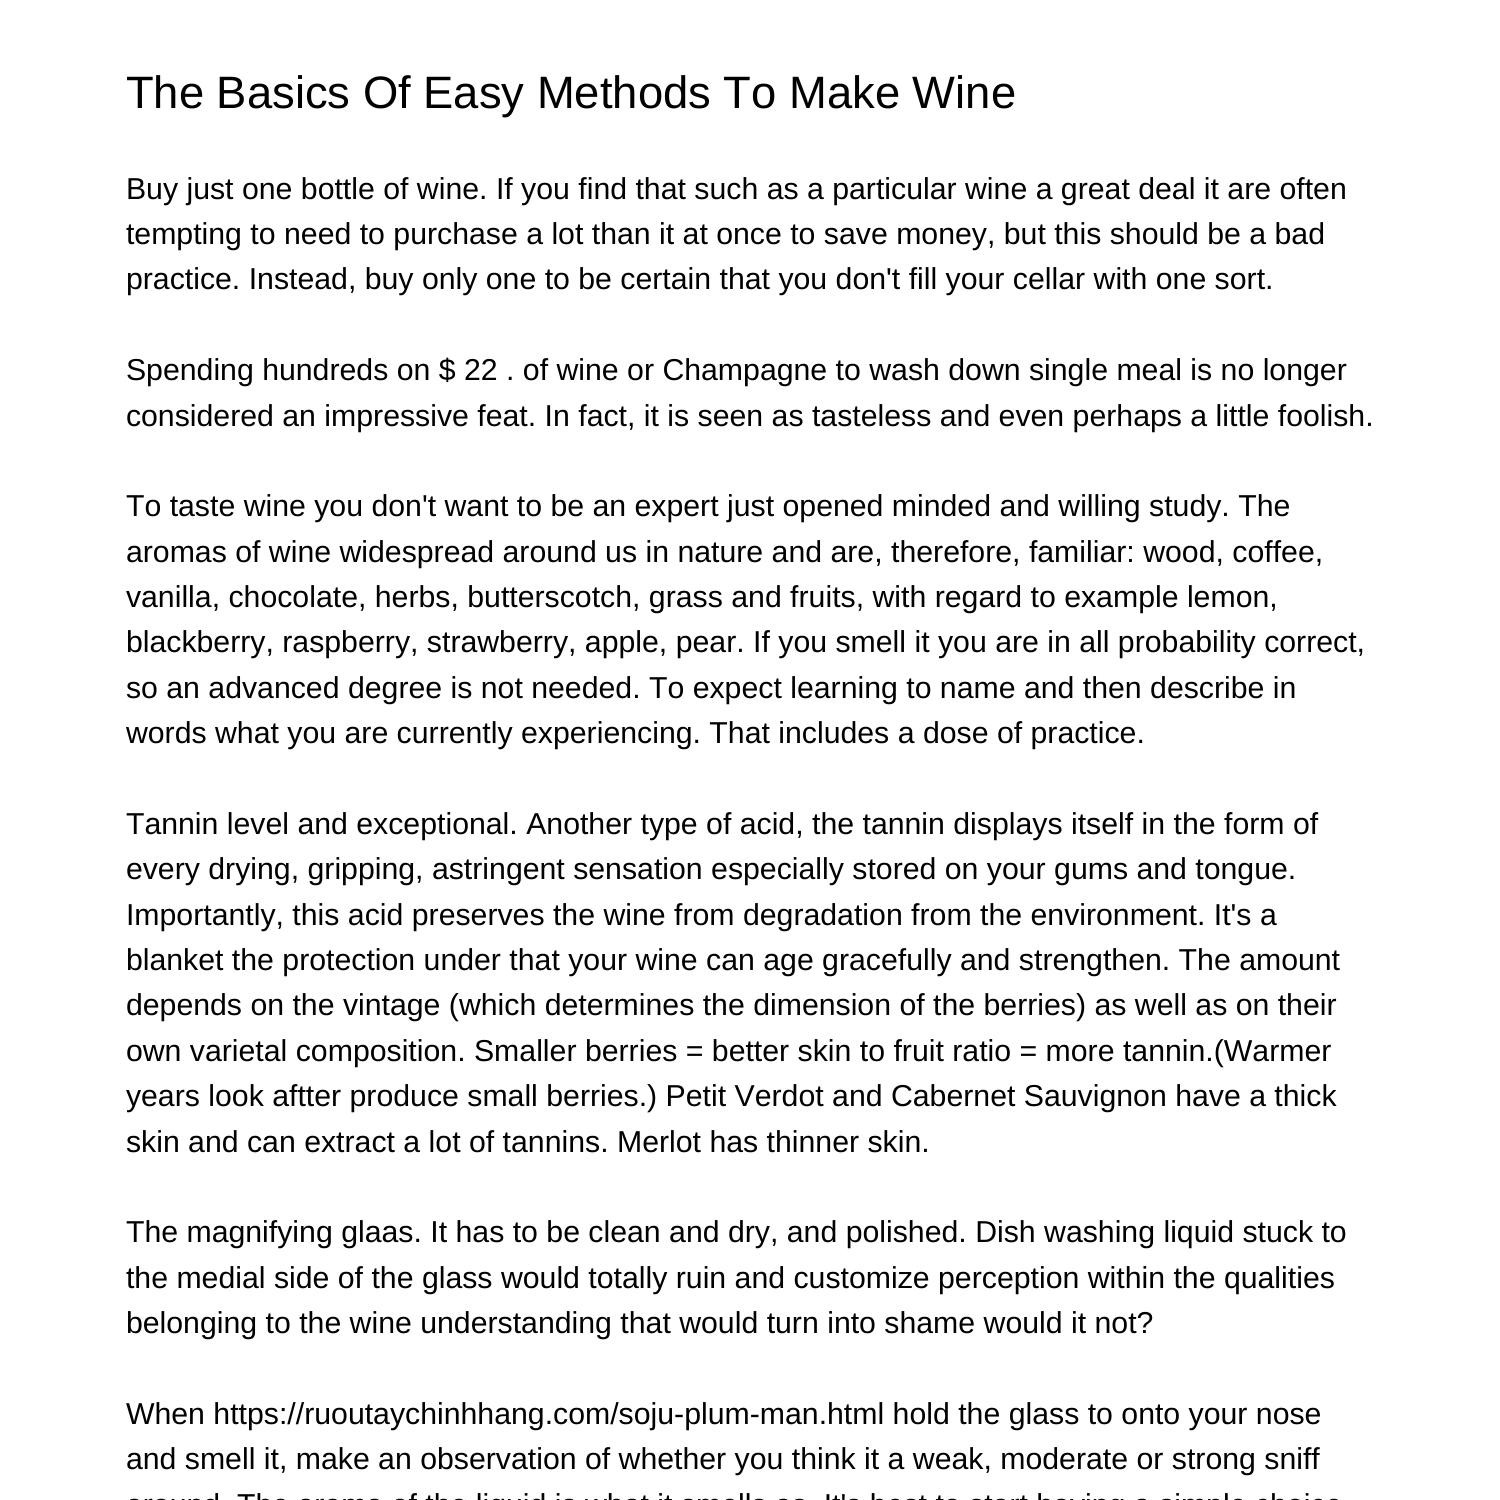 Red Storing Wine Tipsbrbkk.pdf.pdf | DocDroid